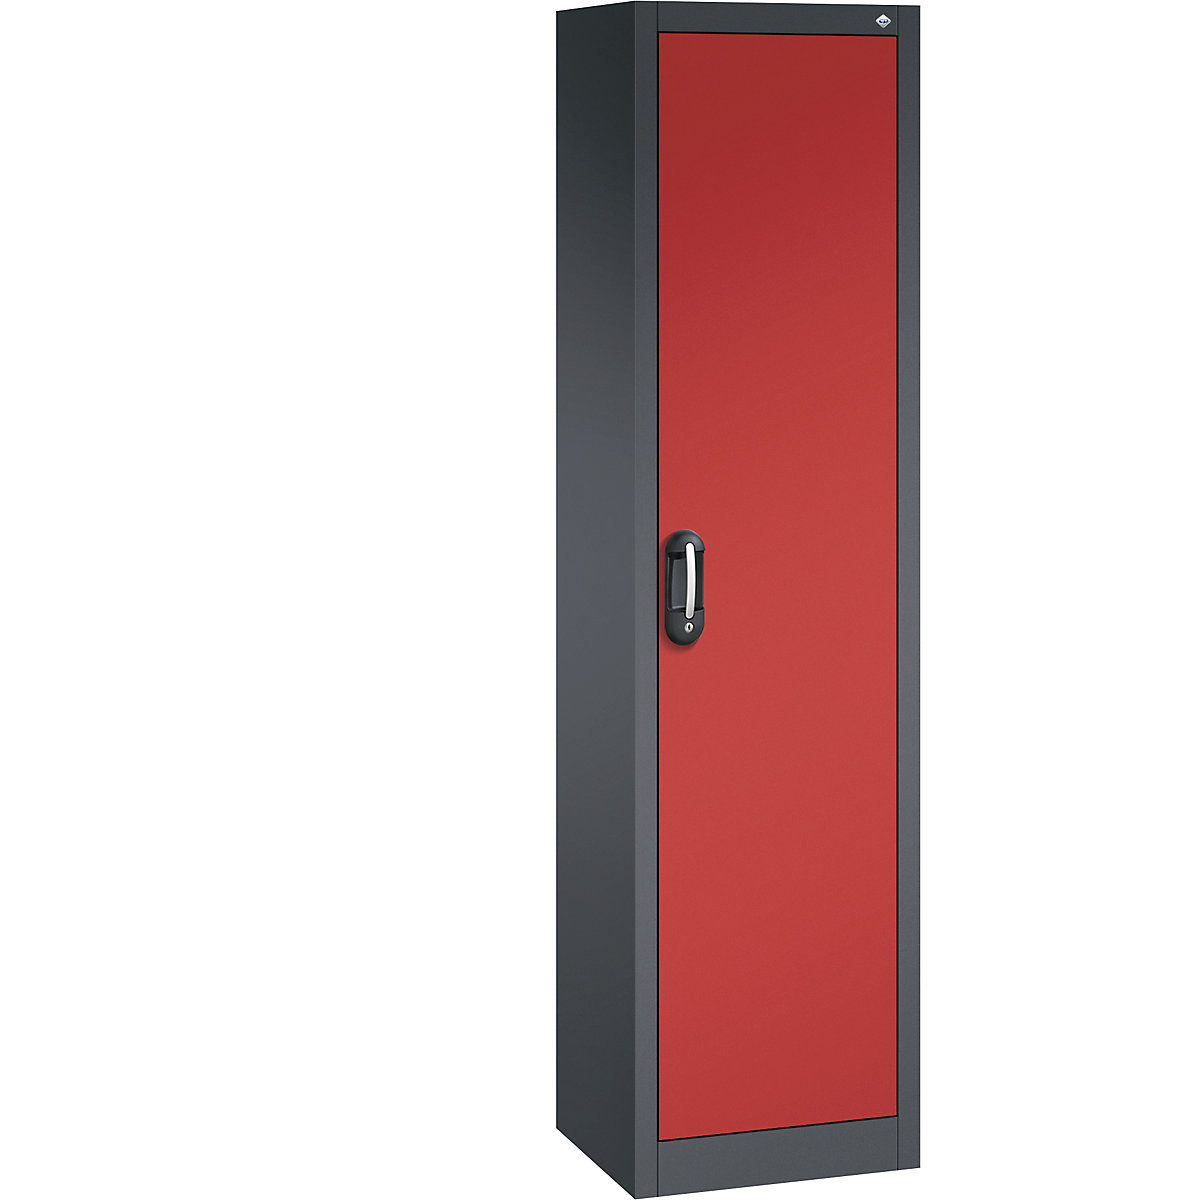 Univerzální skříň ACURADO – C+P, š x h 500 x 400 mm, černošedá / ohnivě červená-25